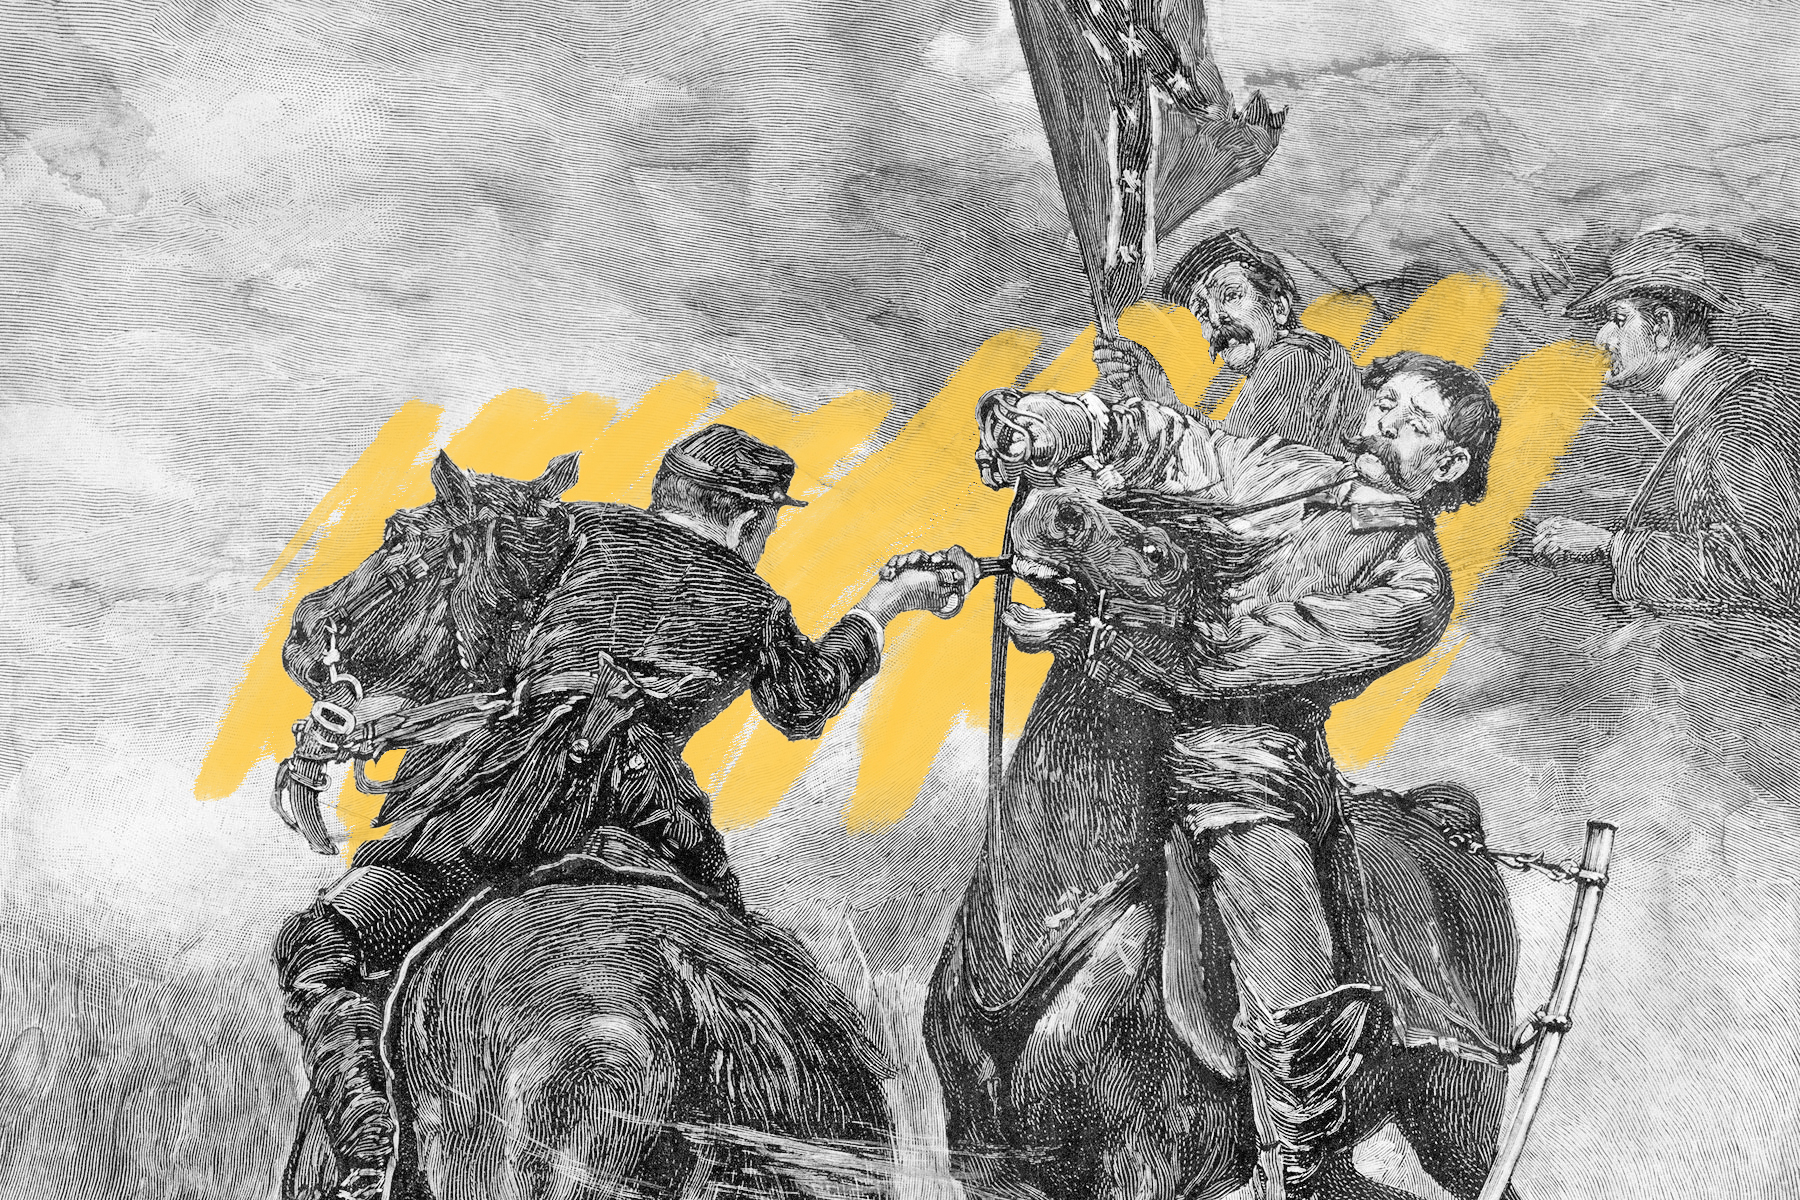 Civil War cavalry duel